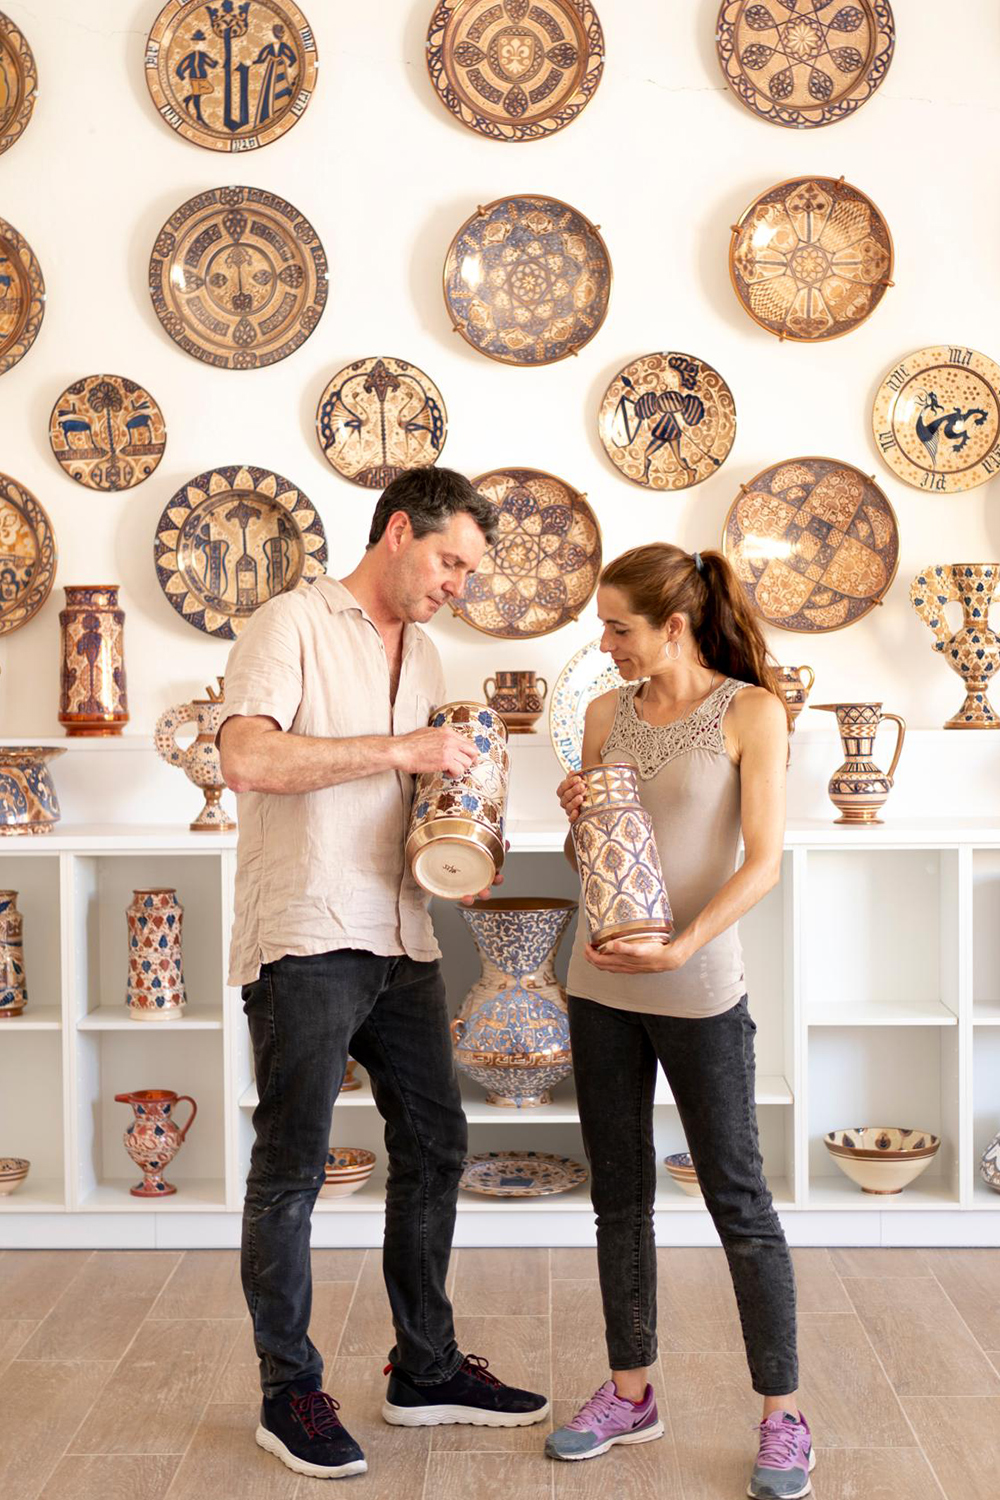 Clara Martínez Muñoz, trainee to ceramicist Arturo Mora